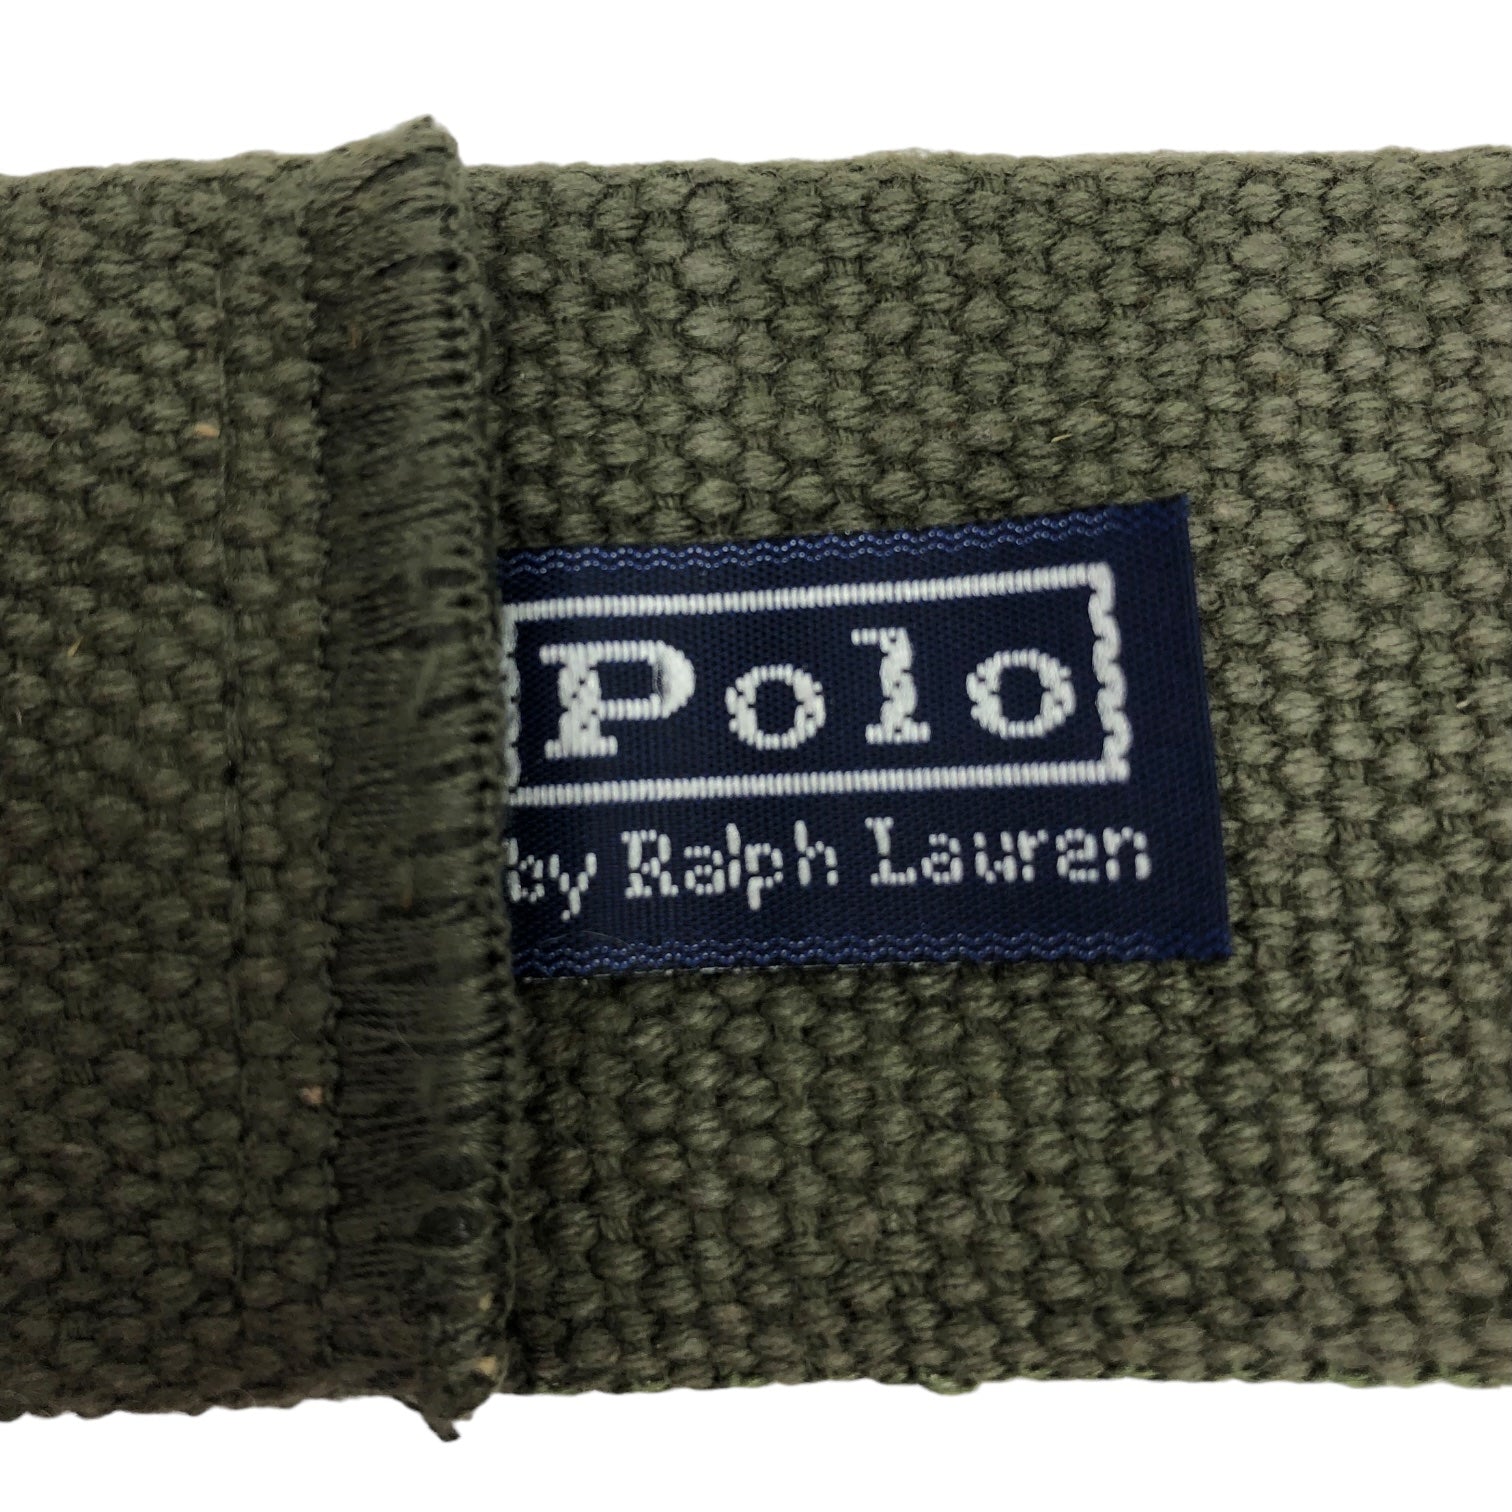 POLO RALPH LAUREN(ポロラルフローレン) military garter belt ミリタリー ガチャ ベルト  カーキ 龍 刺繍